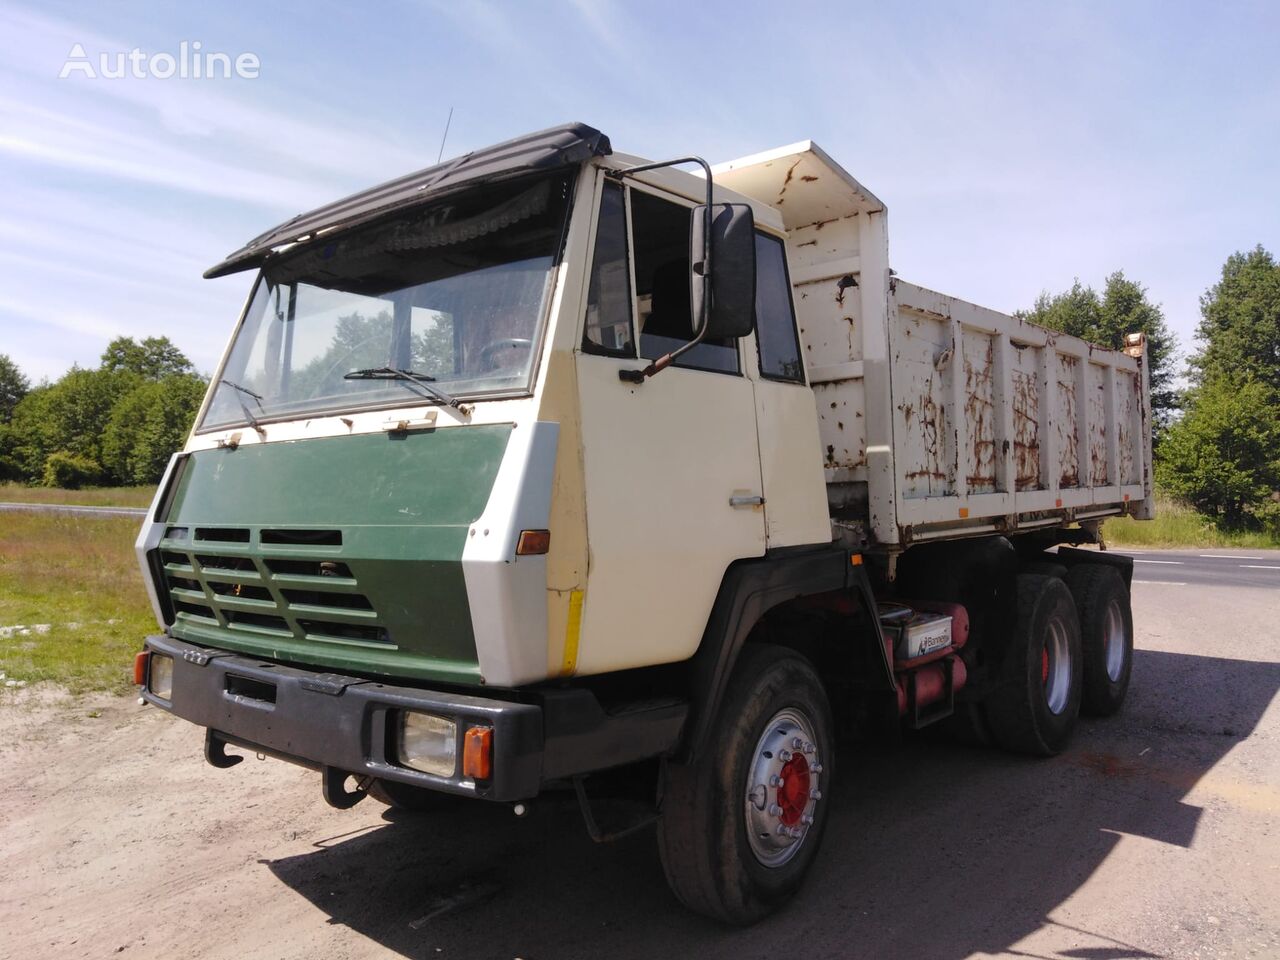 Steyr 1491 dump truck